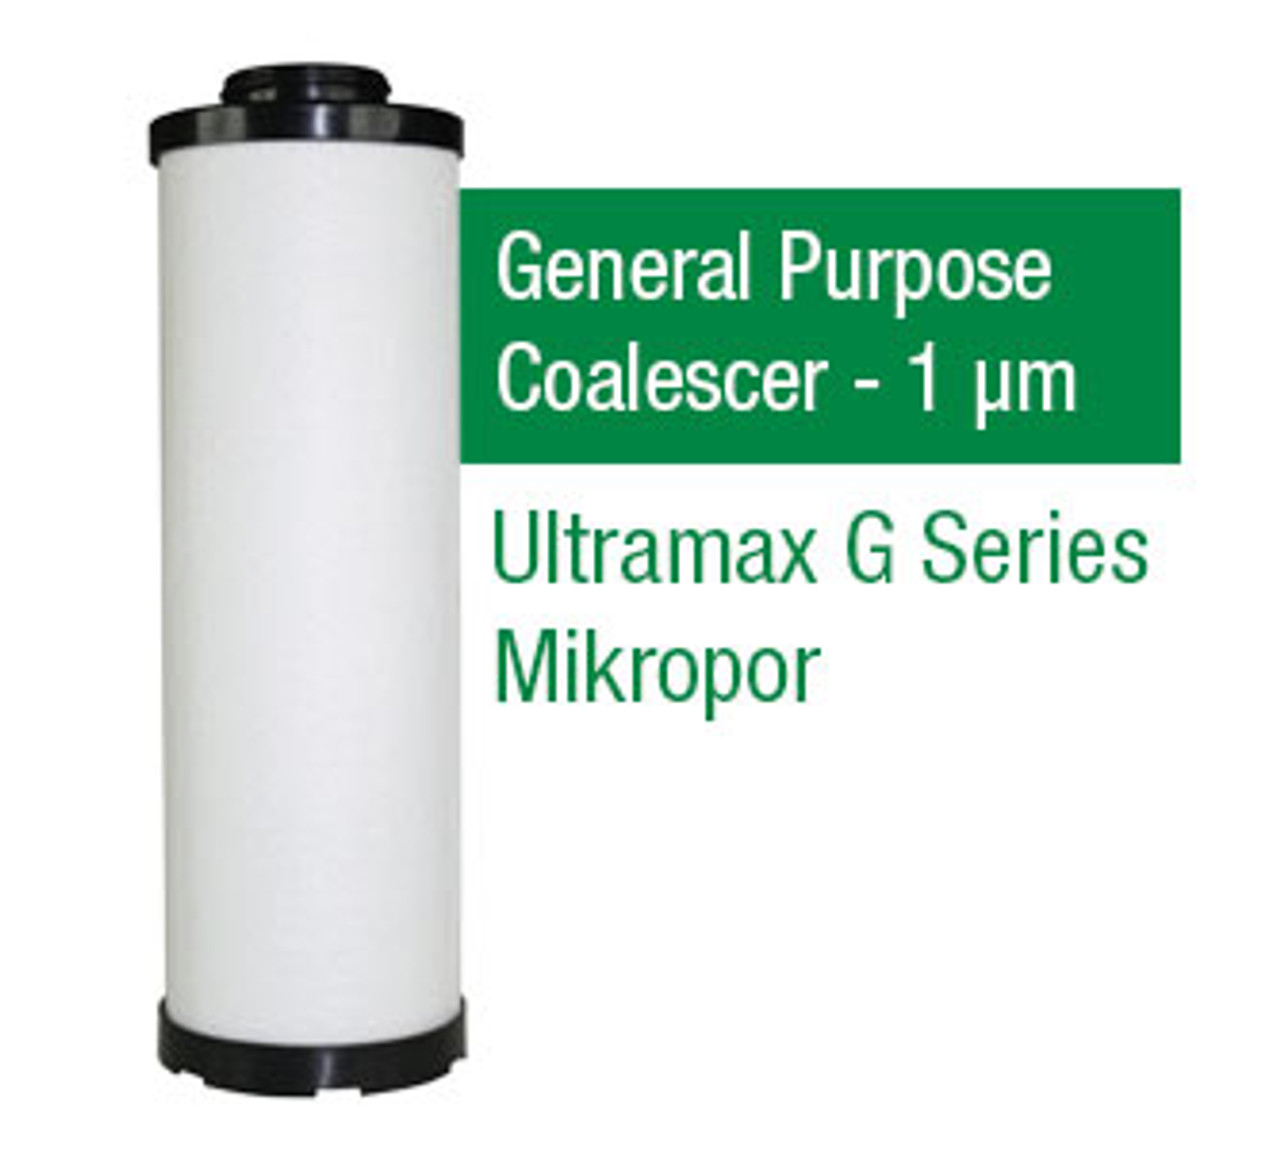 M600X - Grade X - General Purpose Coalescer - 1 um (M600X/G600MX)